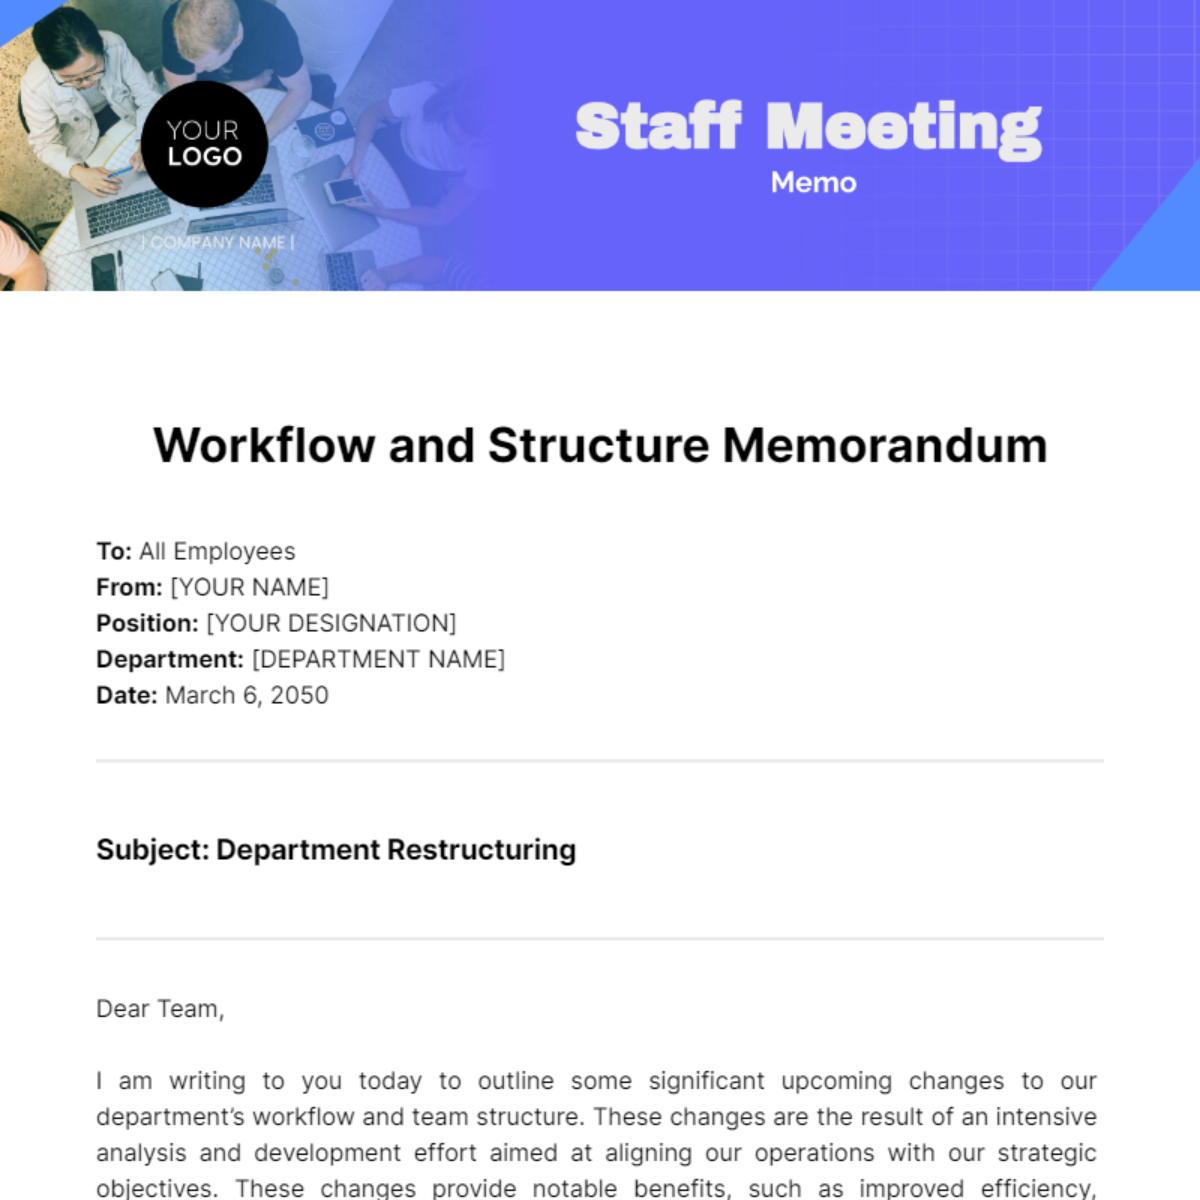 Staff Meeting Memo Template